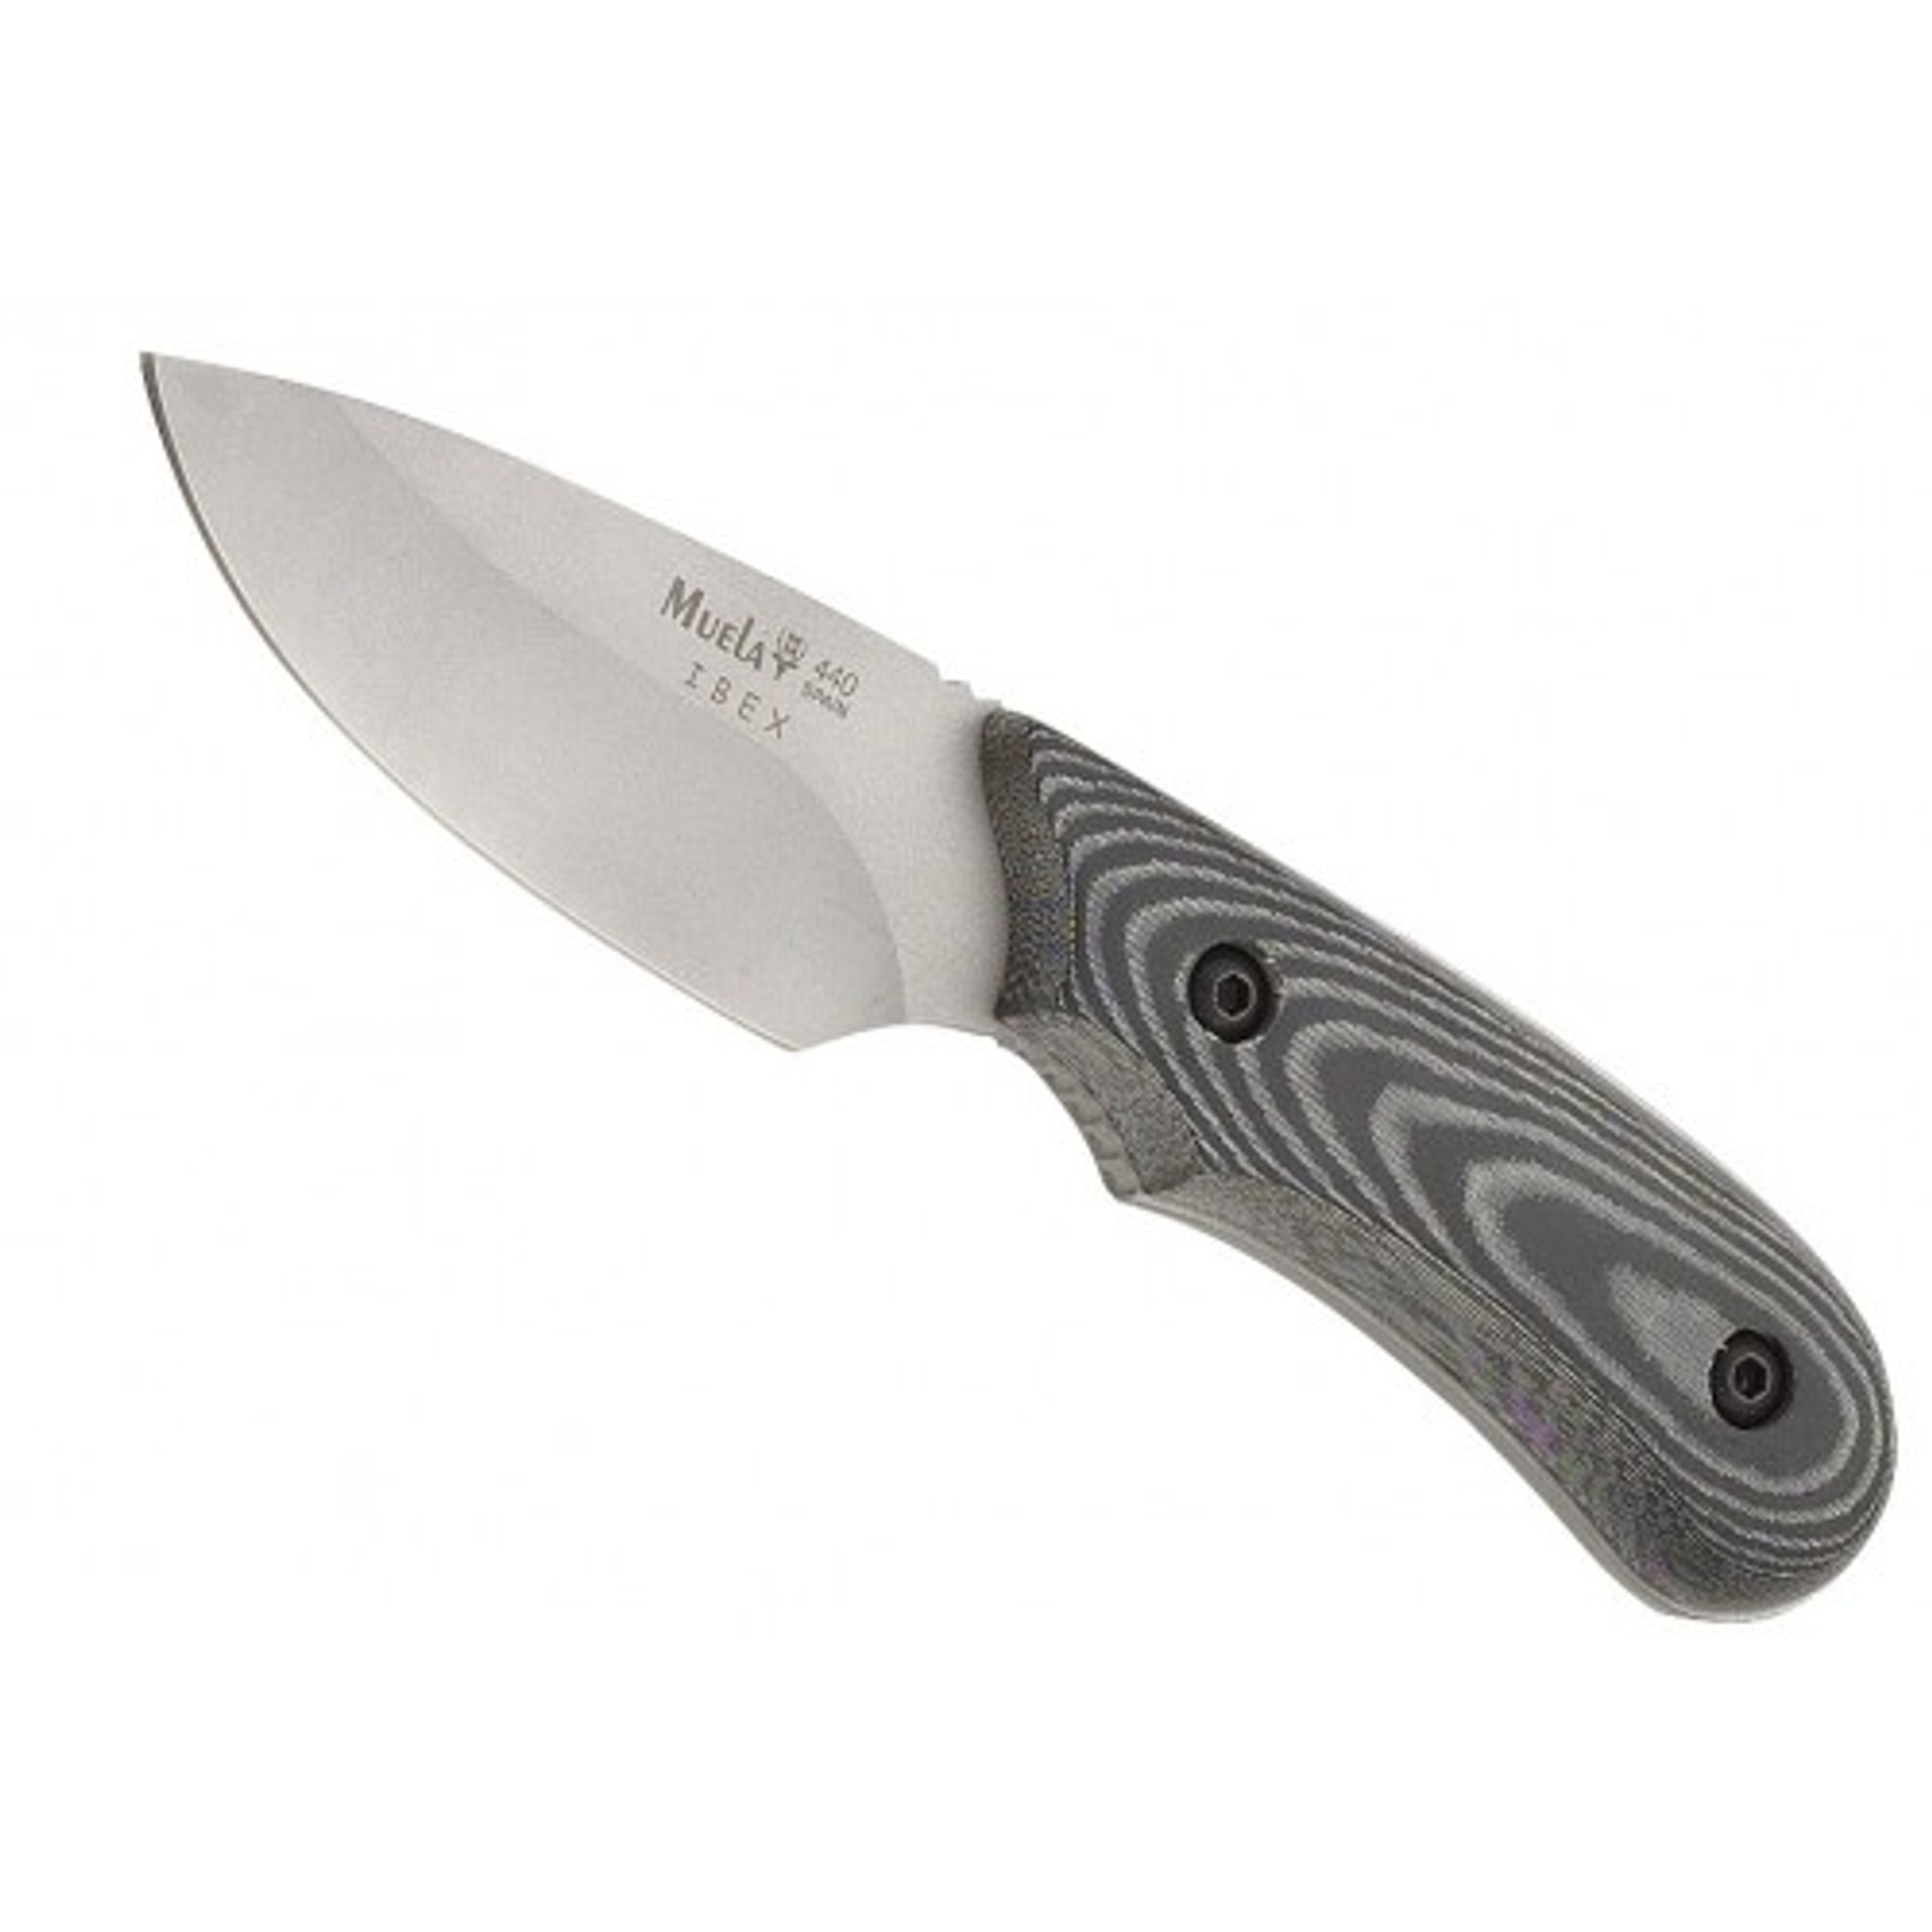 MUELA IBEX-8M, X50CrMoV15, 2-3/4" Fixed Blade Skinning Knife, Black Micarta Handle